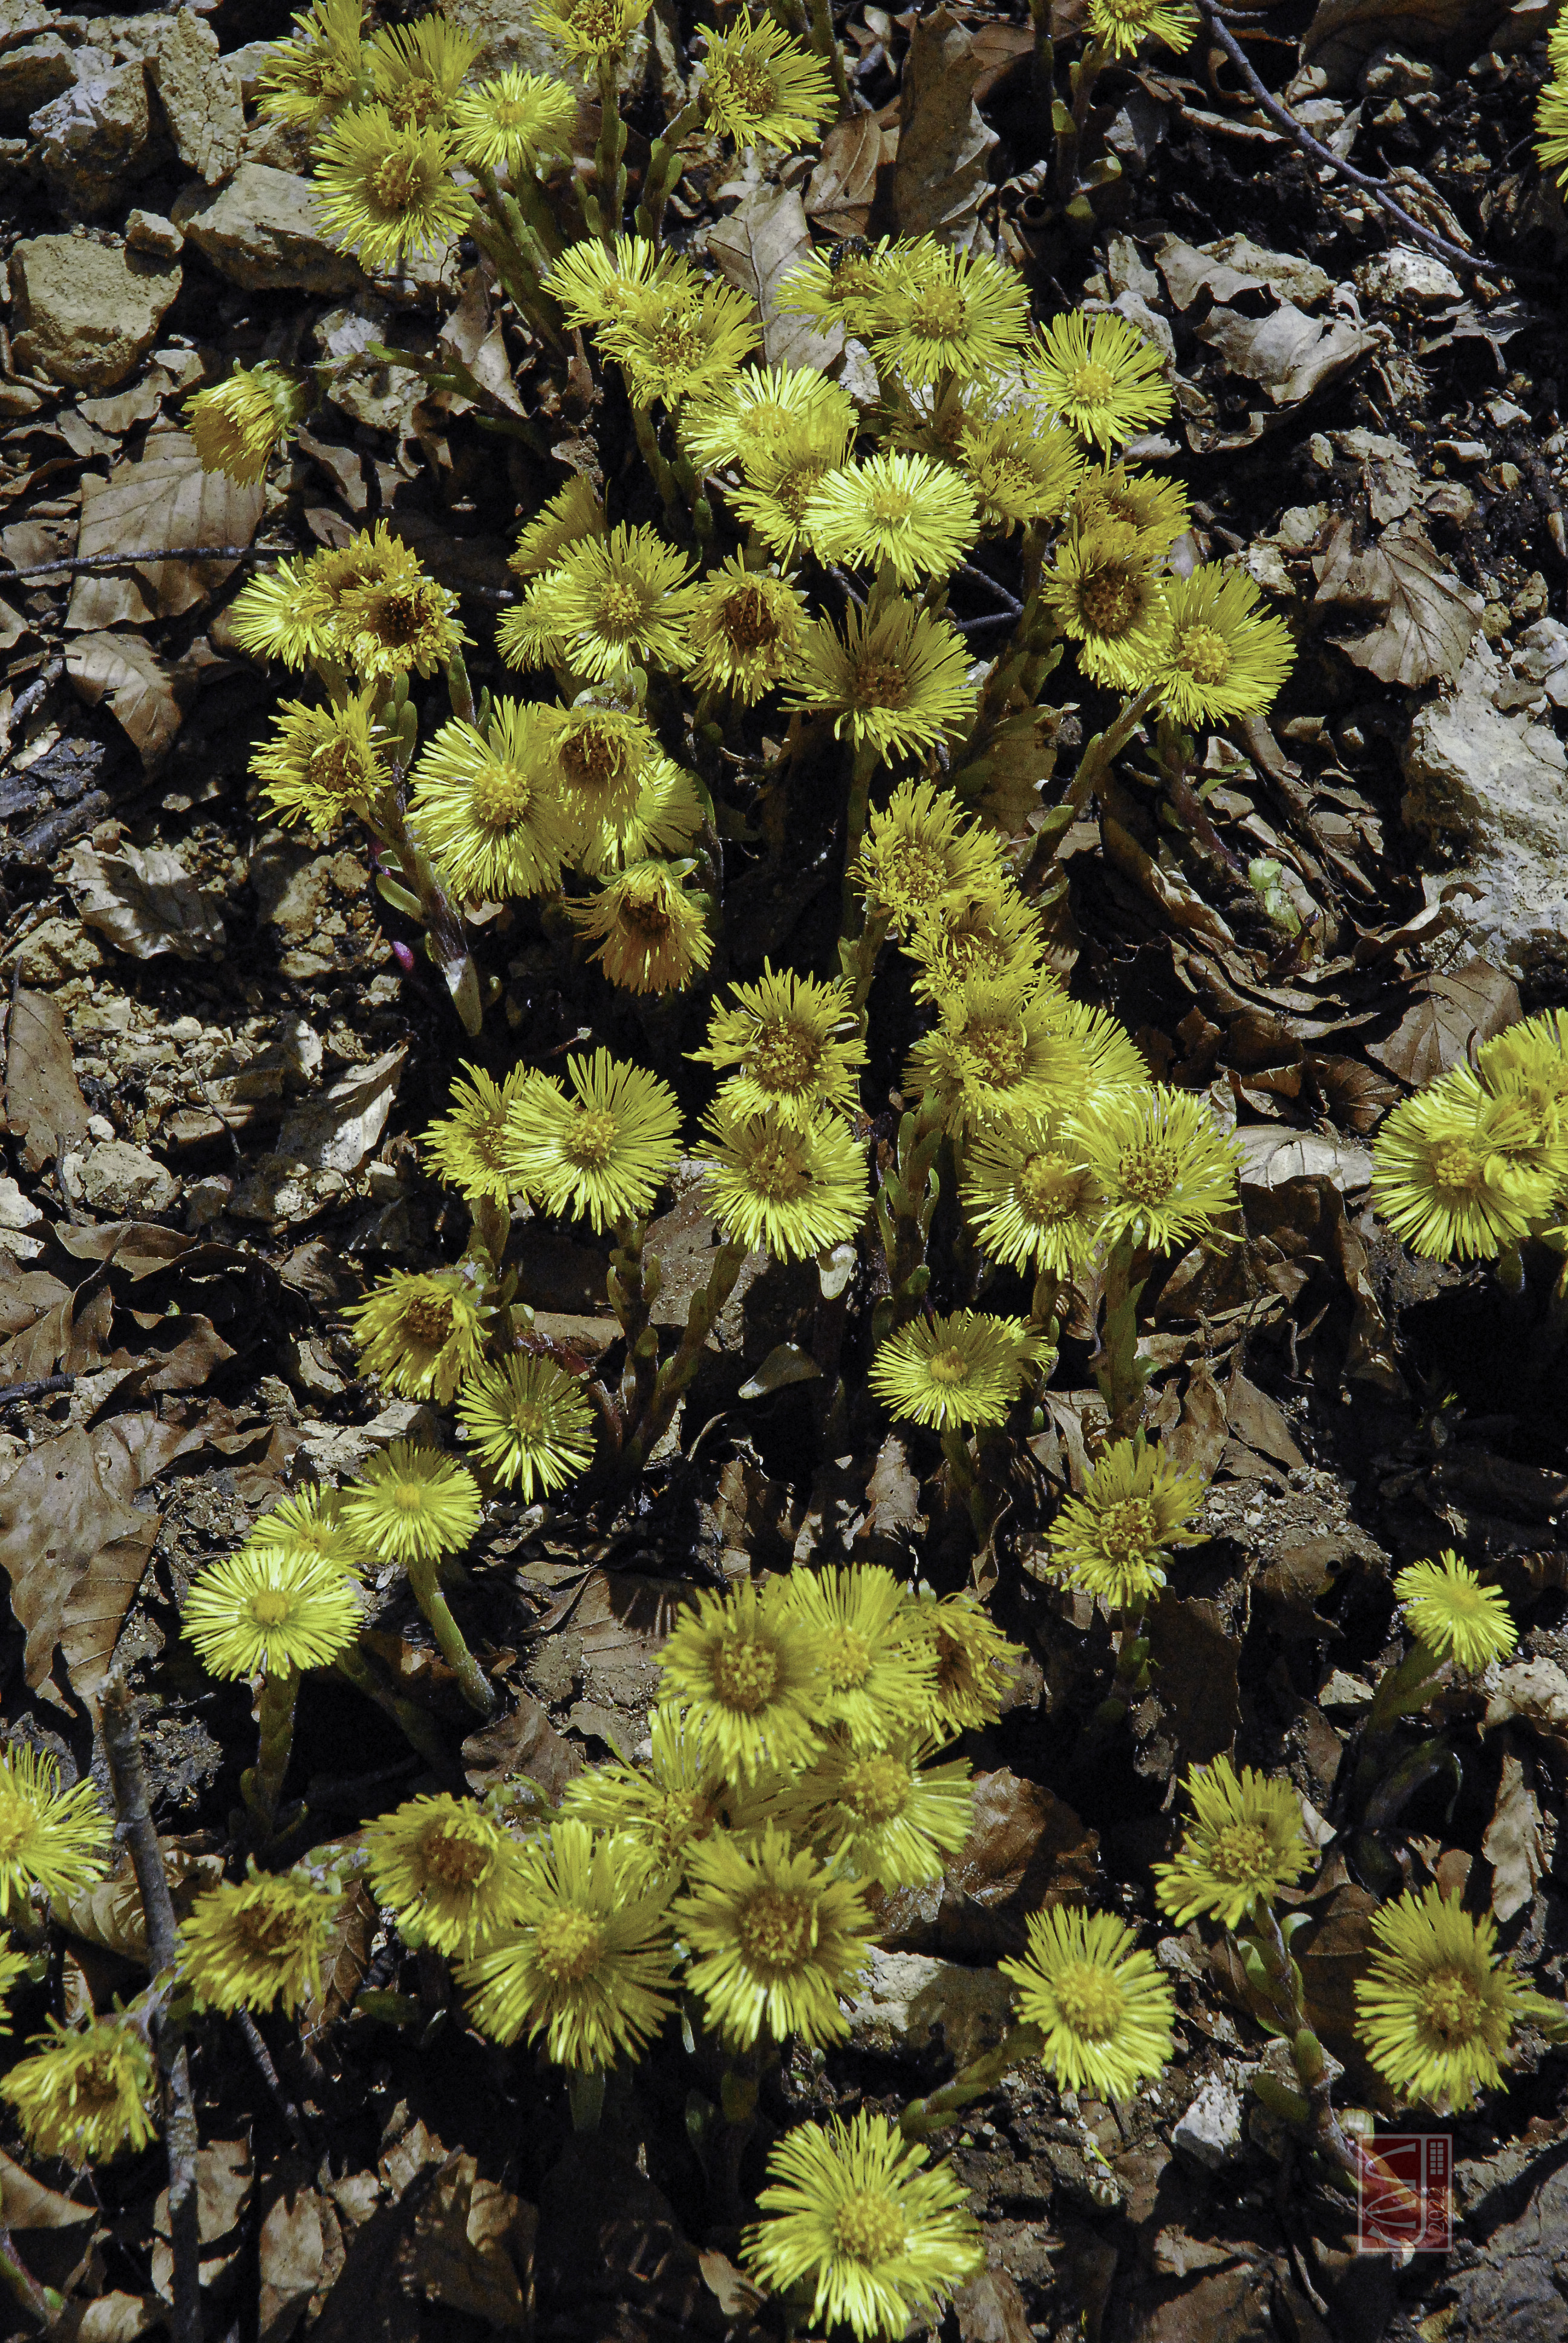 A mass of yellow flowerheads on stony ground